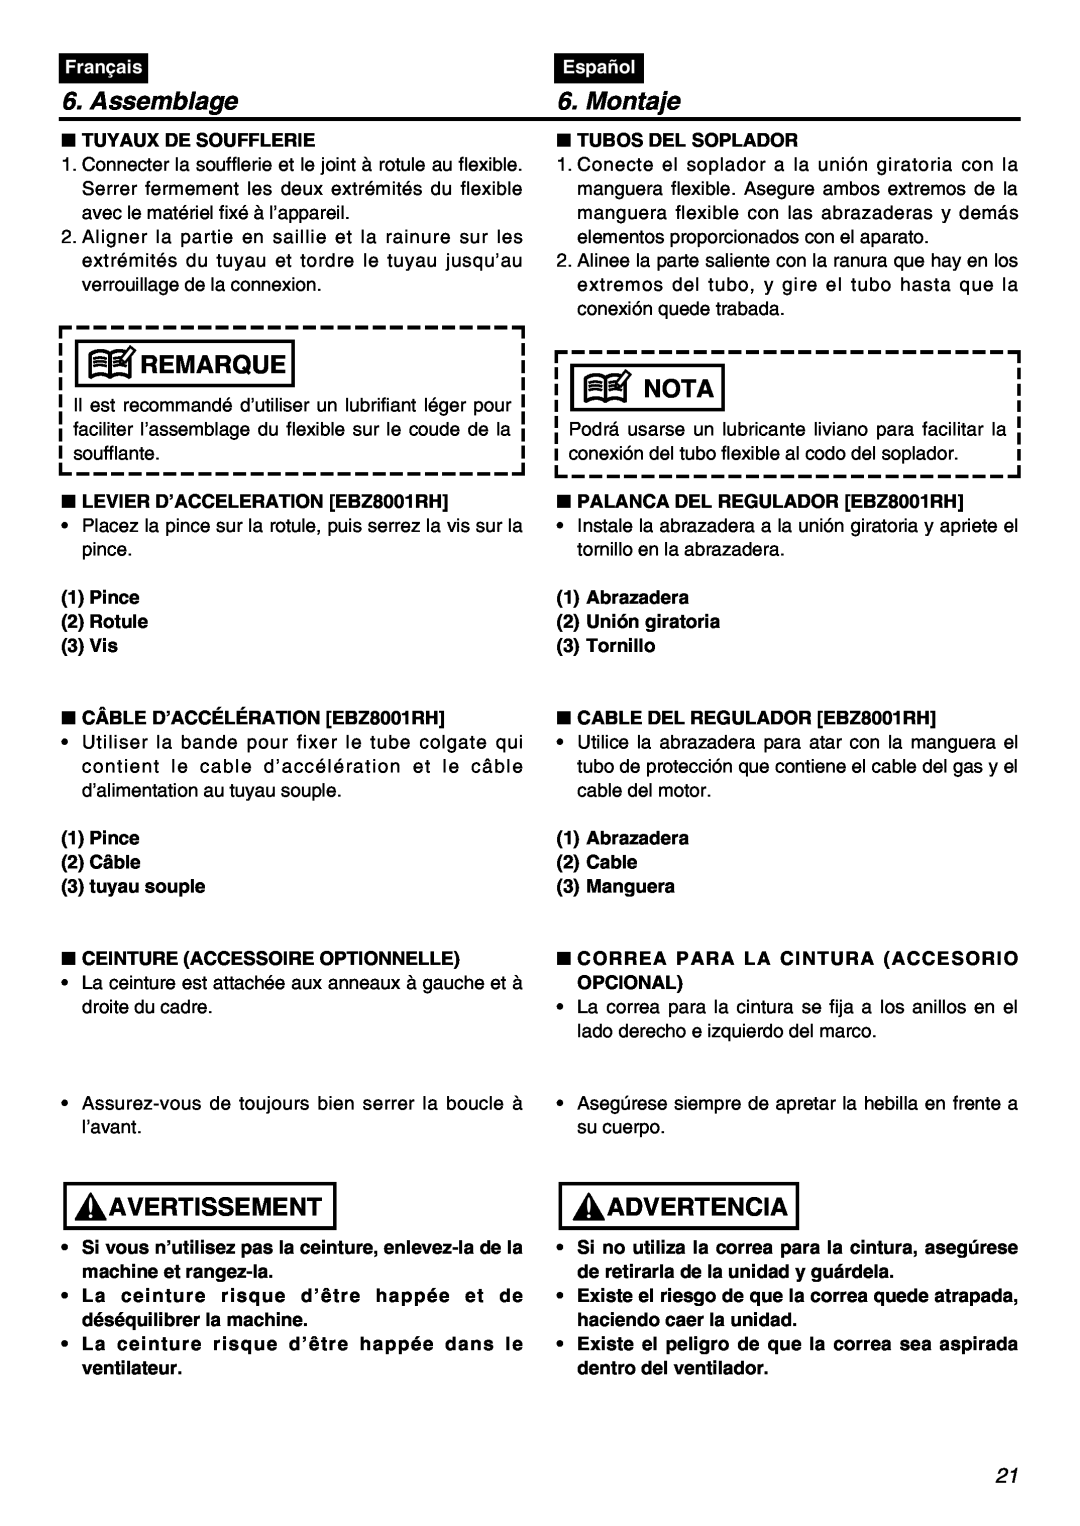 RedMax EBZ8001 Assemblage, Montaje, Tuyaux De Soufflerie, Tubos Del Soplador, Remarque, Nota, Avertissement, Advertencia 